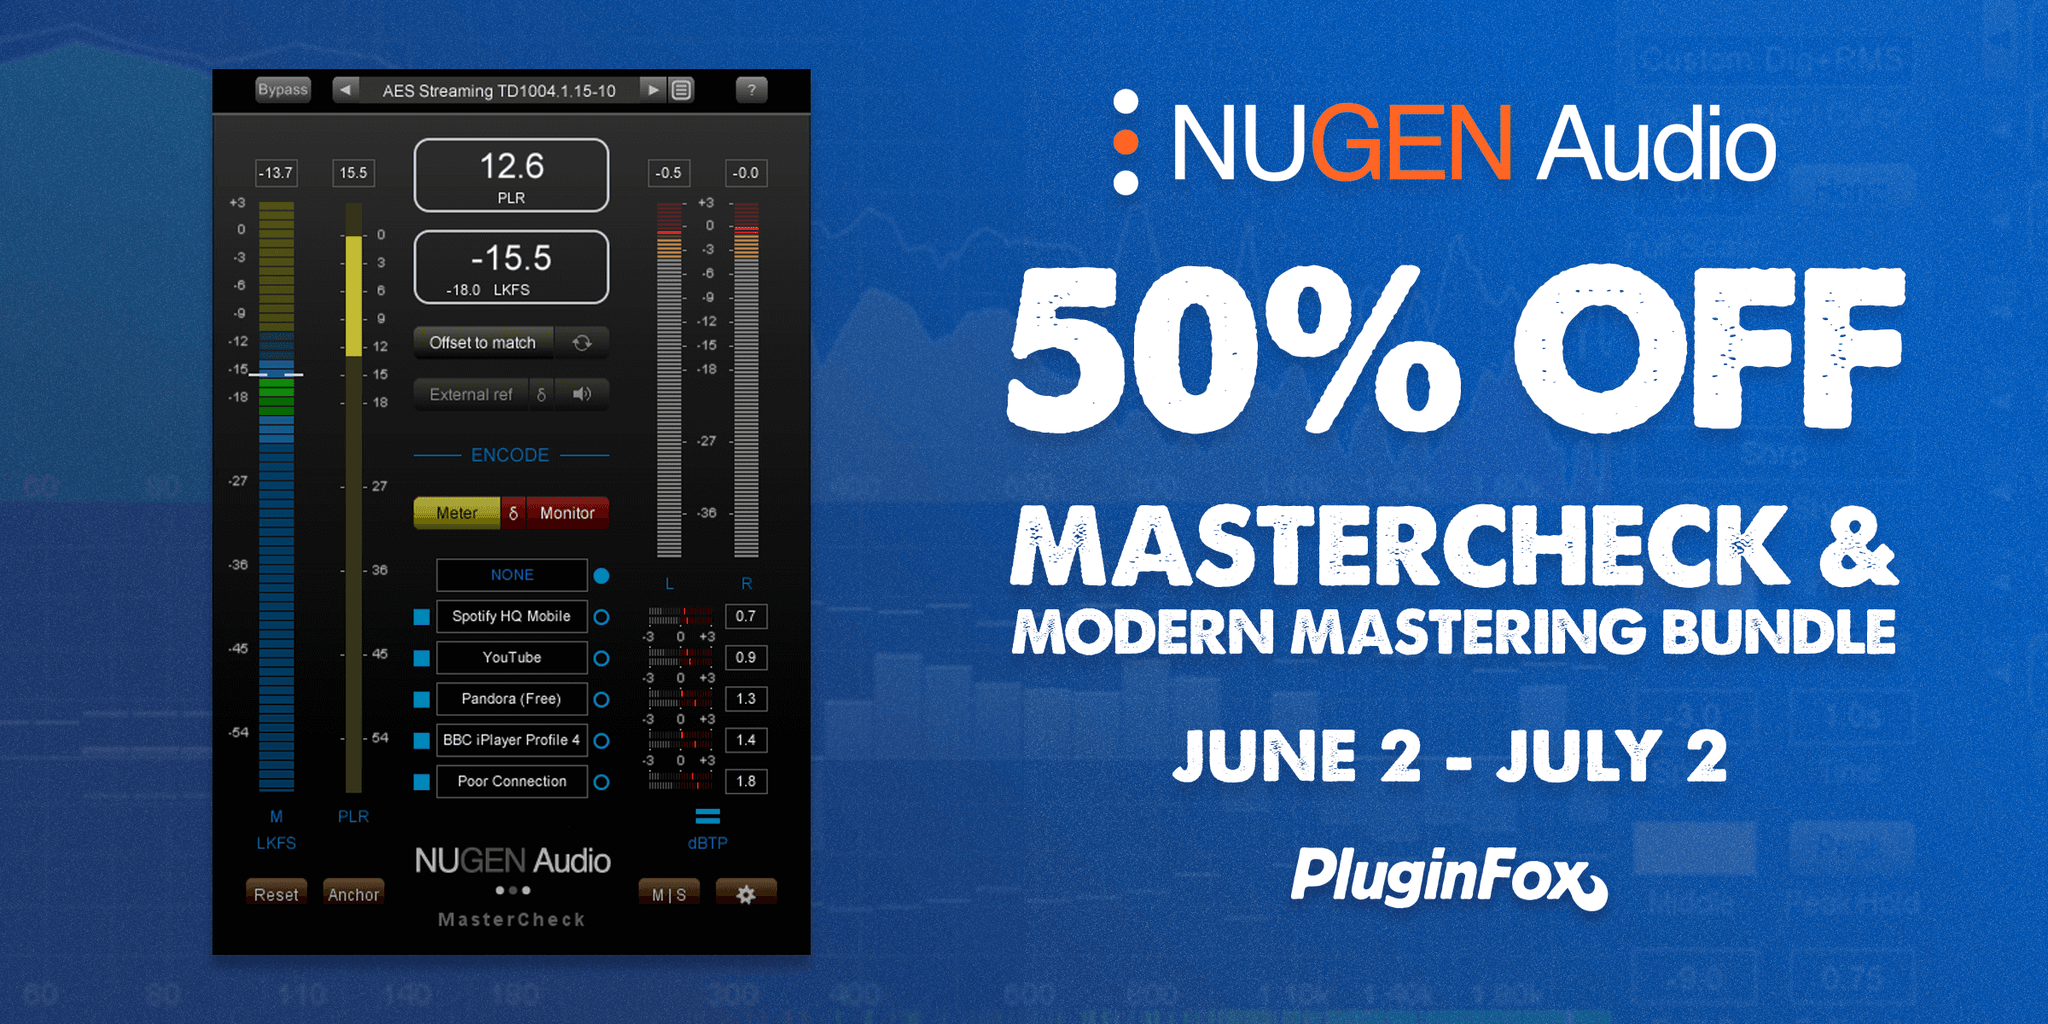 Nugen Audio Mastering Sale June 2 - July 2